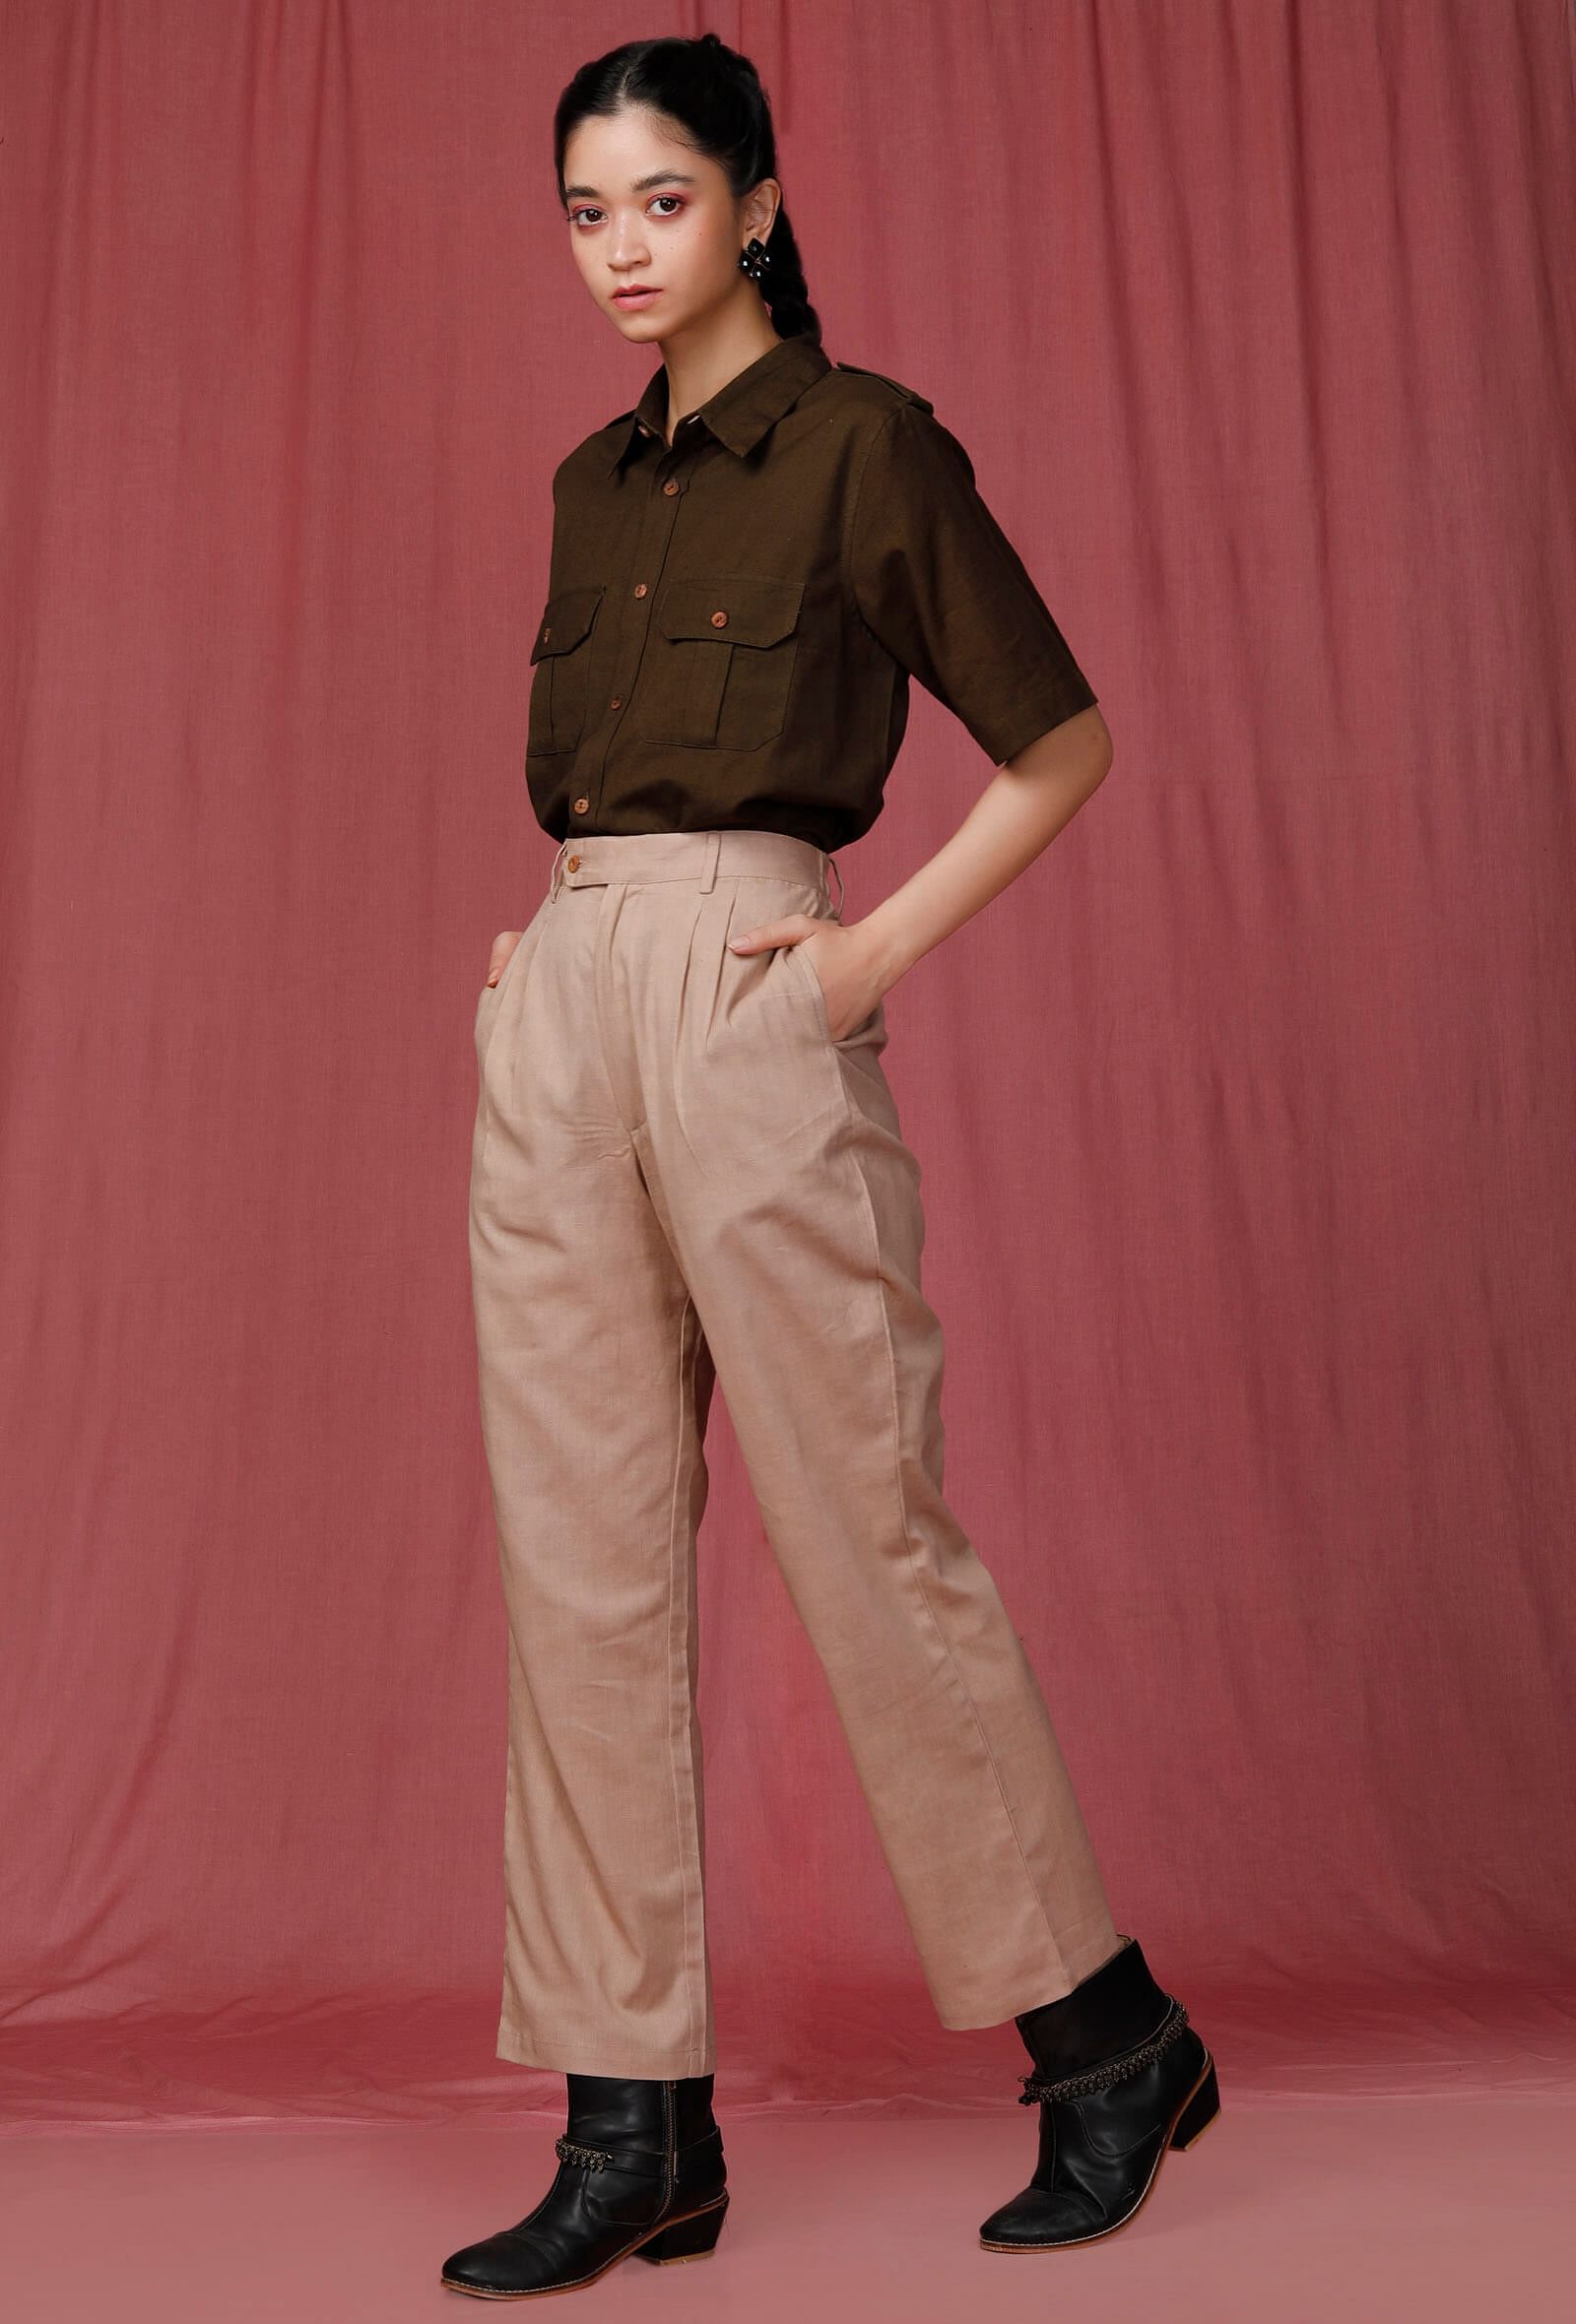 Set of 2: Olive Green Plain Linen Pocket Shirt with Brown Plain Linen Pant